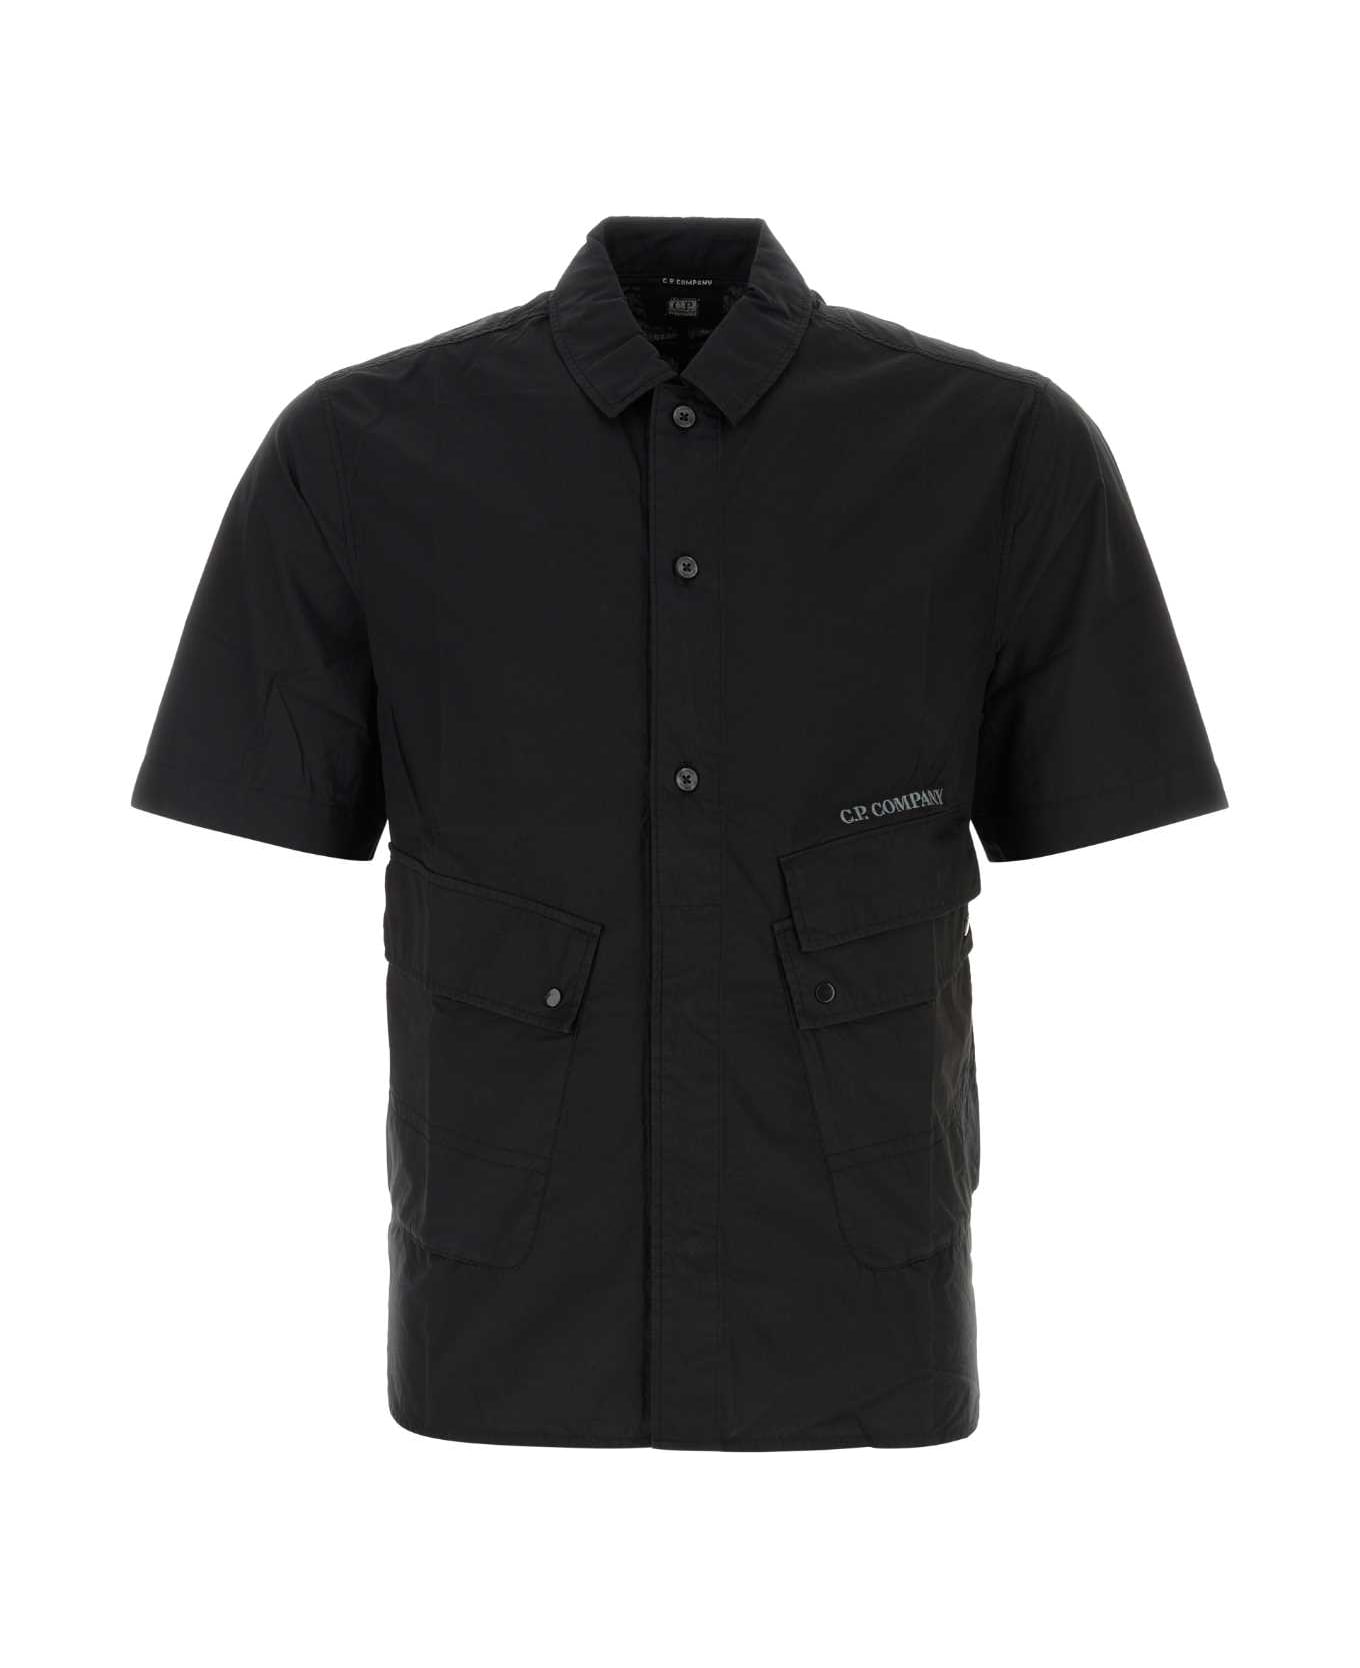 C.P. Company Black Cotton Shirt - Black